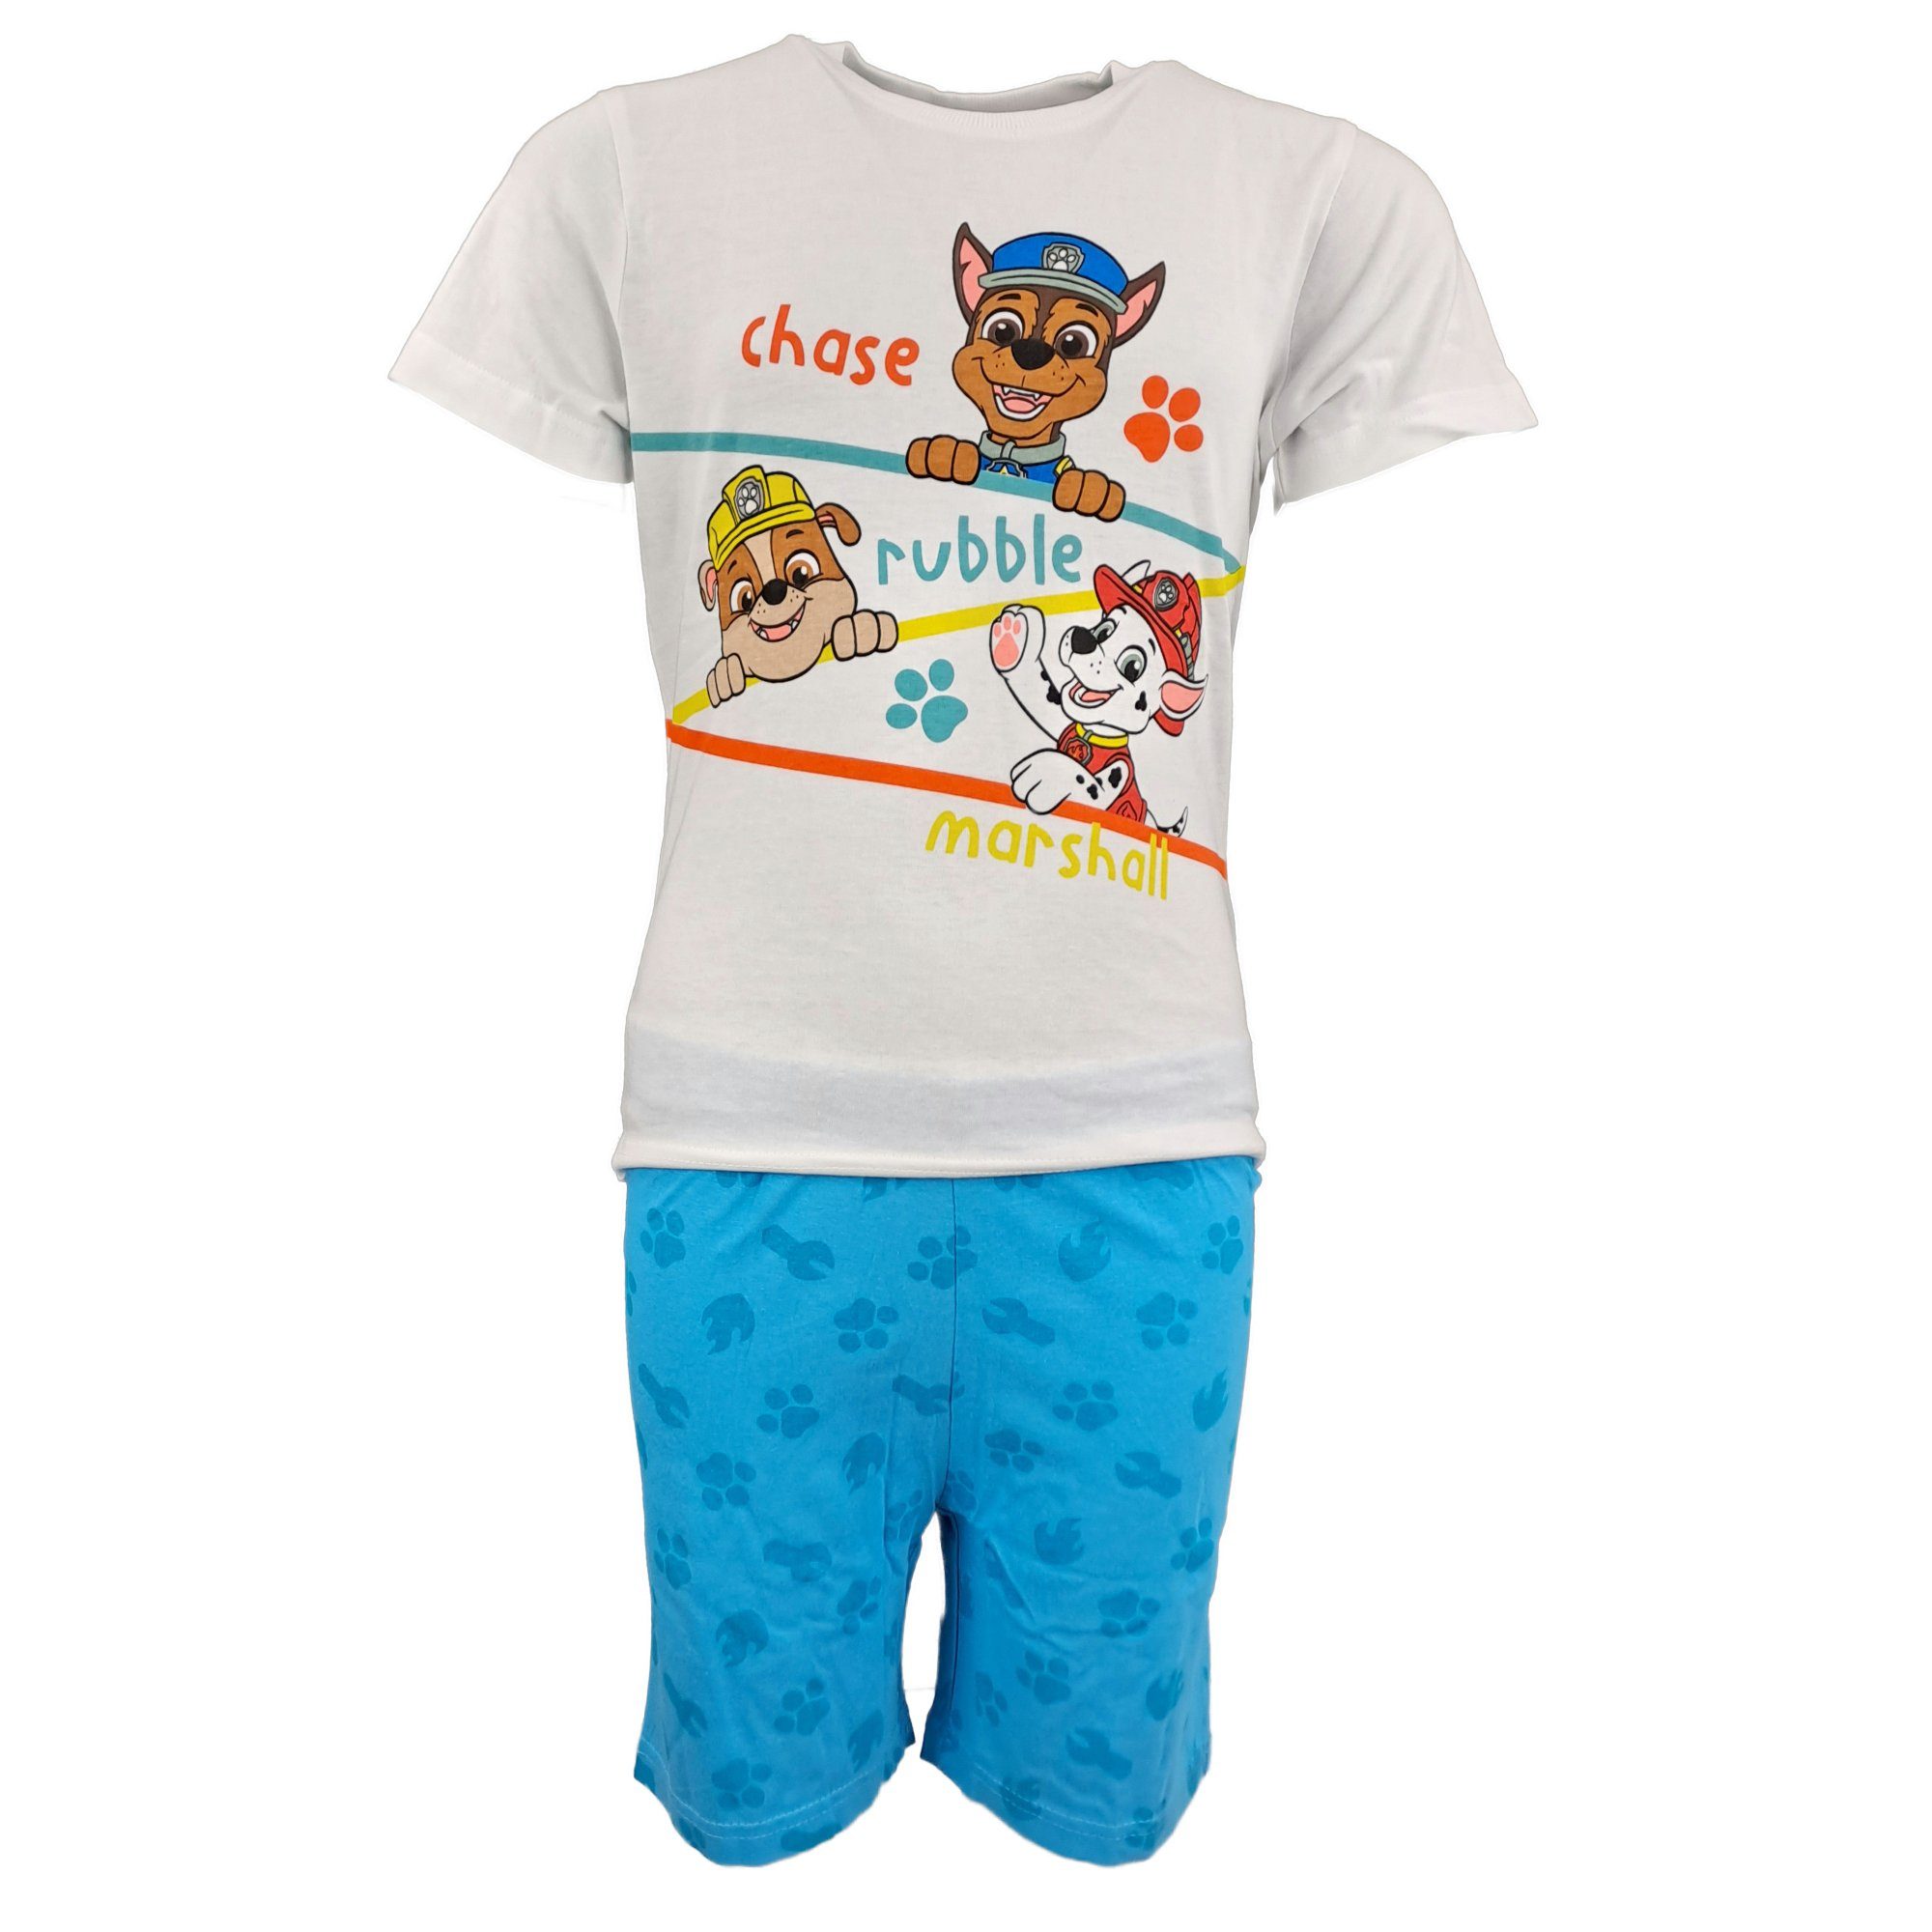 PAW PATROL Schlafanzug Paw Patrol Chase Rubble Marshall Jungen Kinder Pyjama Gr. 98 bis 128 Weiß